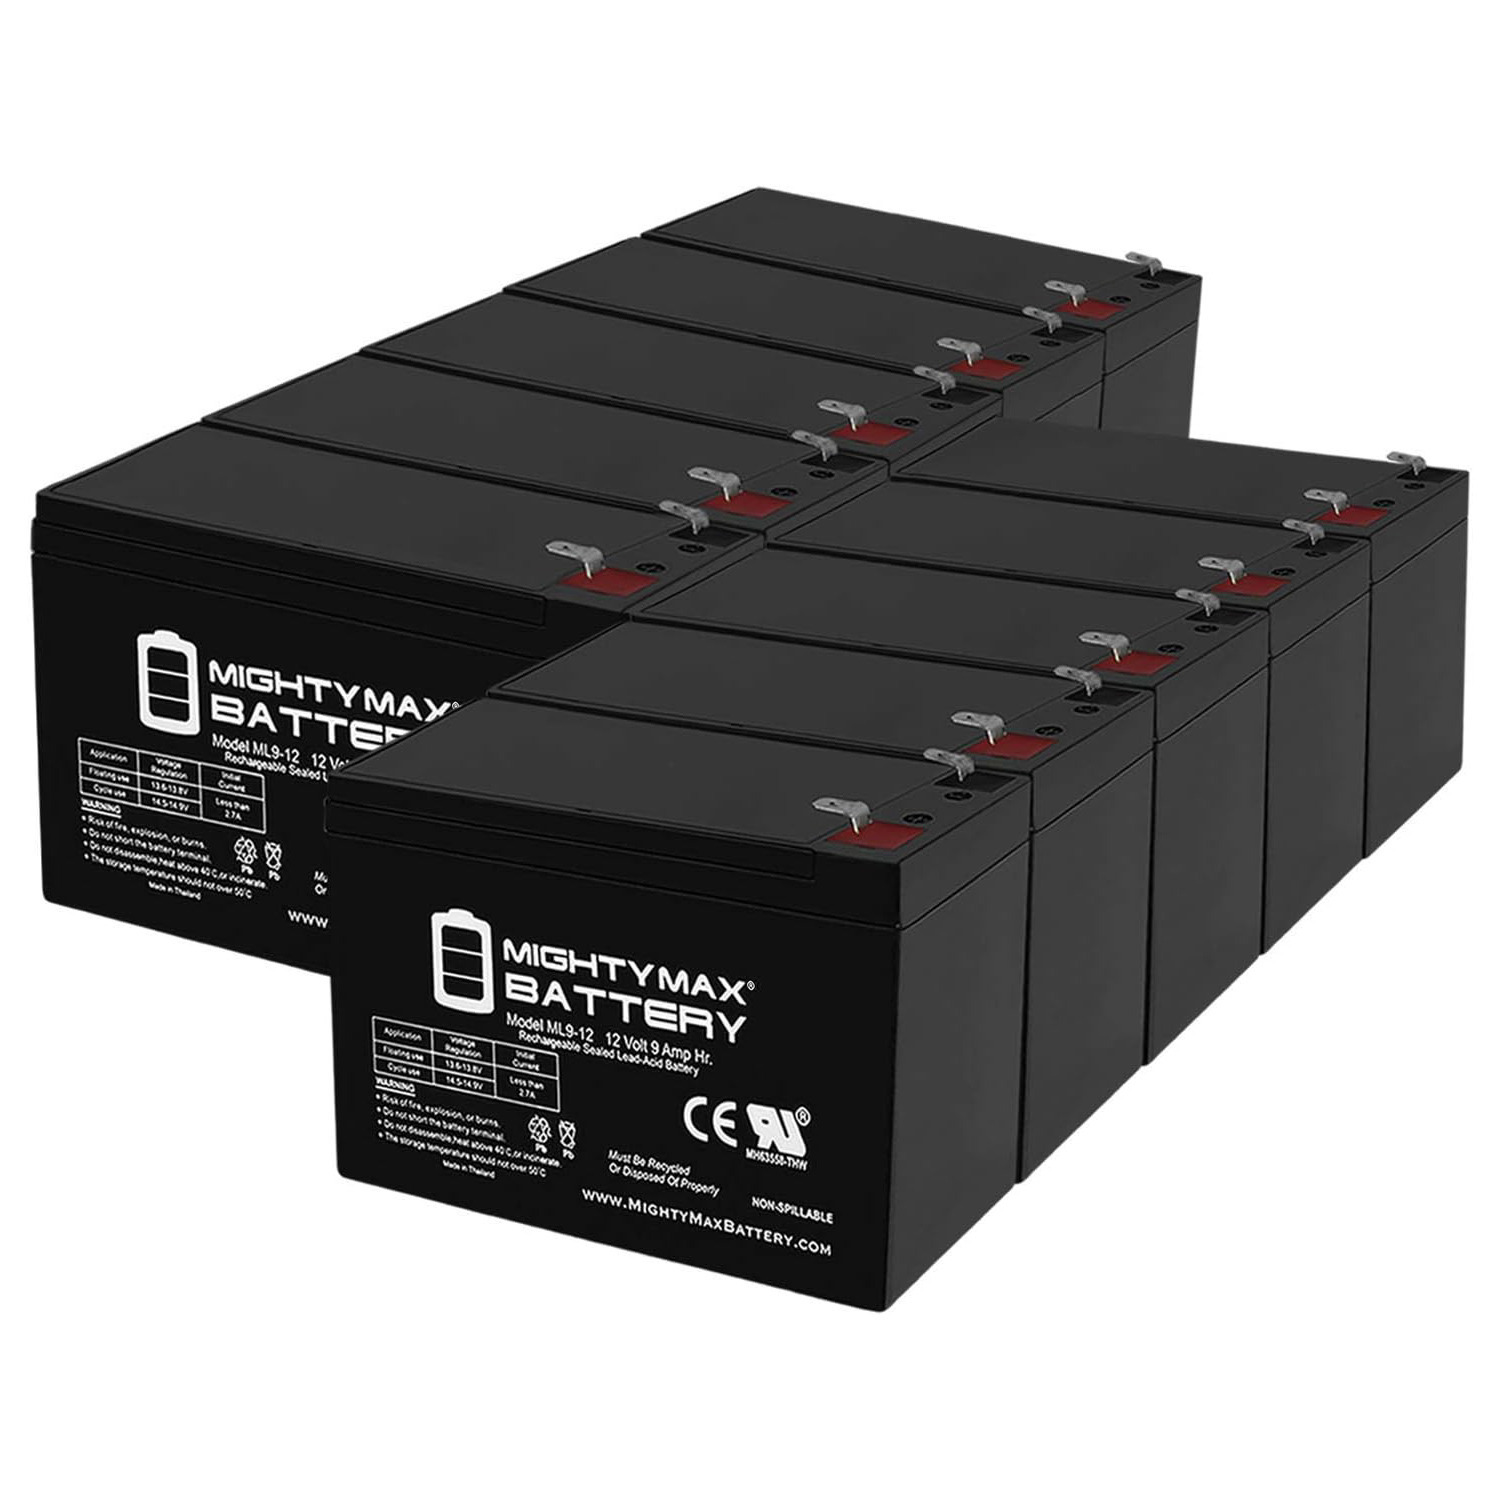 Altronix SMP312C 12V, 9Ah Lead Acid Battery - 10 Pack